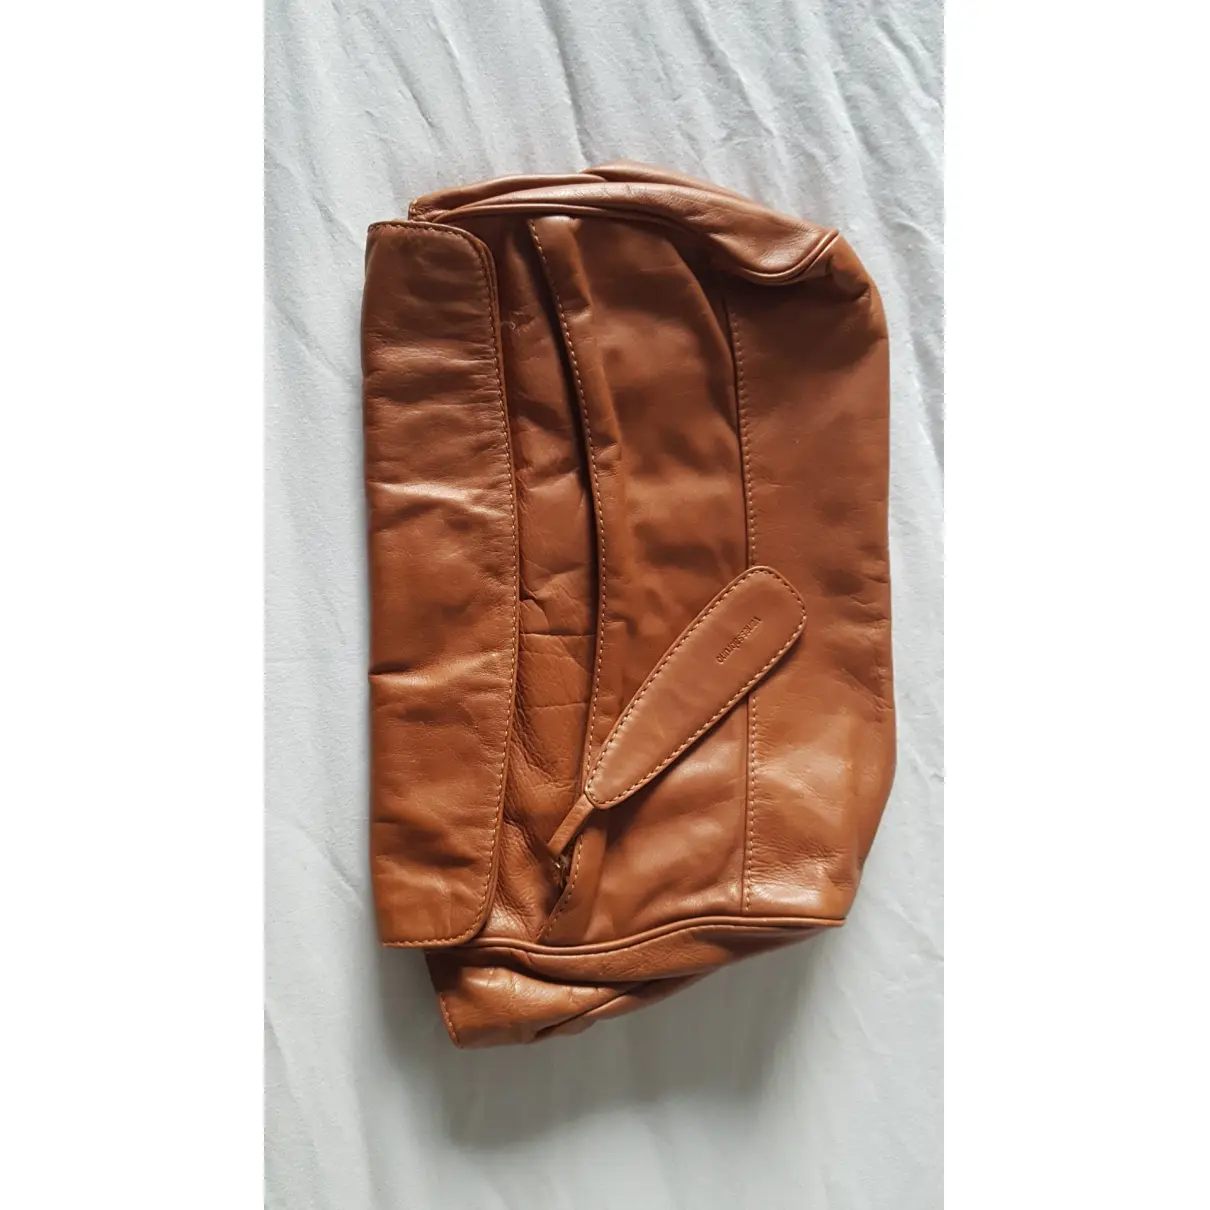 Leather clutch bag Vanessa Bruno